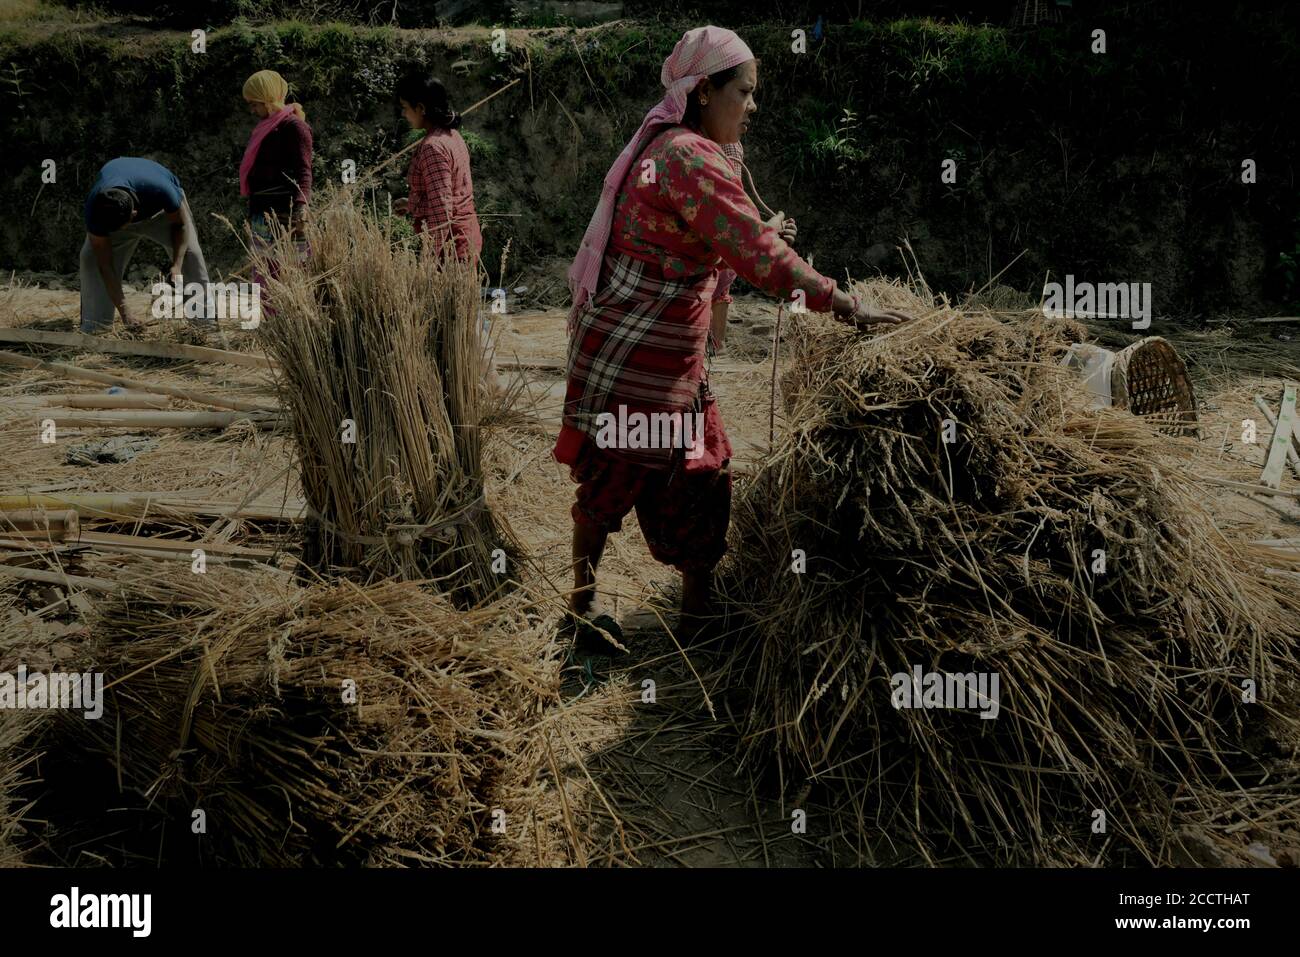 Frauen stapeln trockene Weizengräser am Stadtrand von Bhaktapur, Bagmati Pradesh Provinz, Nepal. Stockfoto